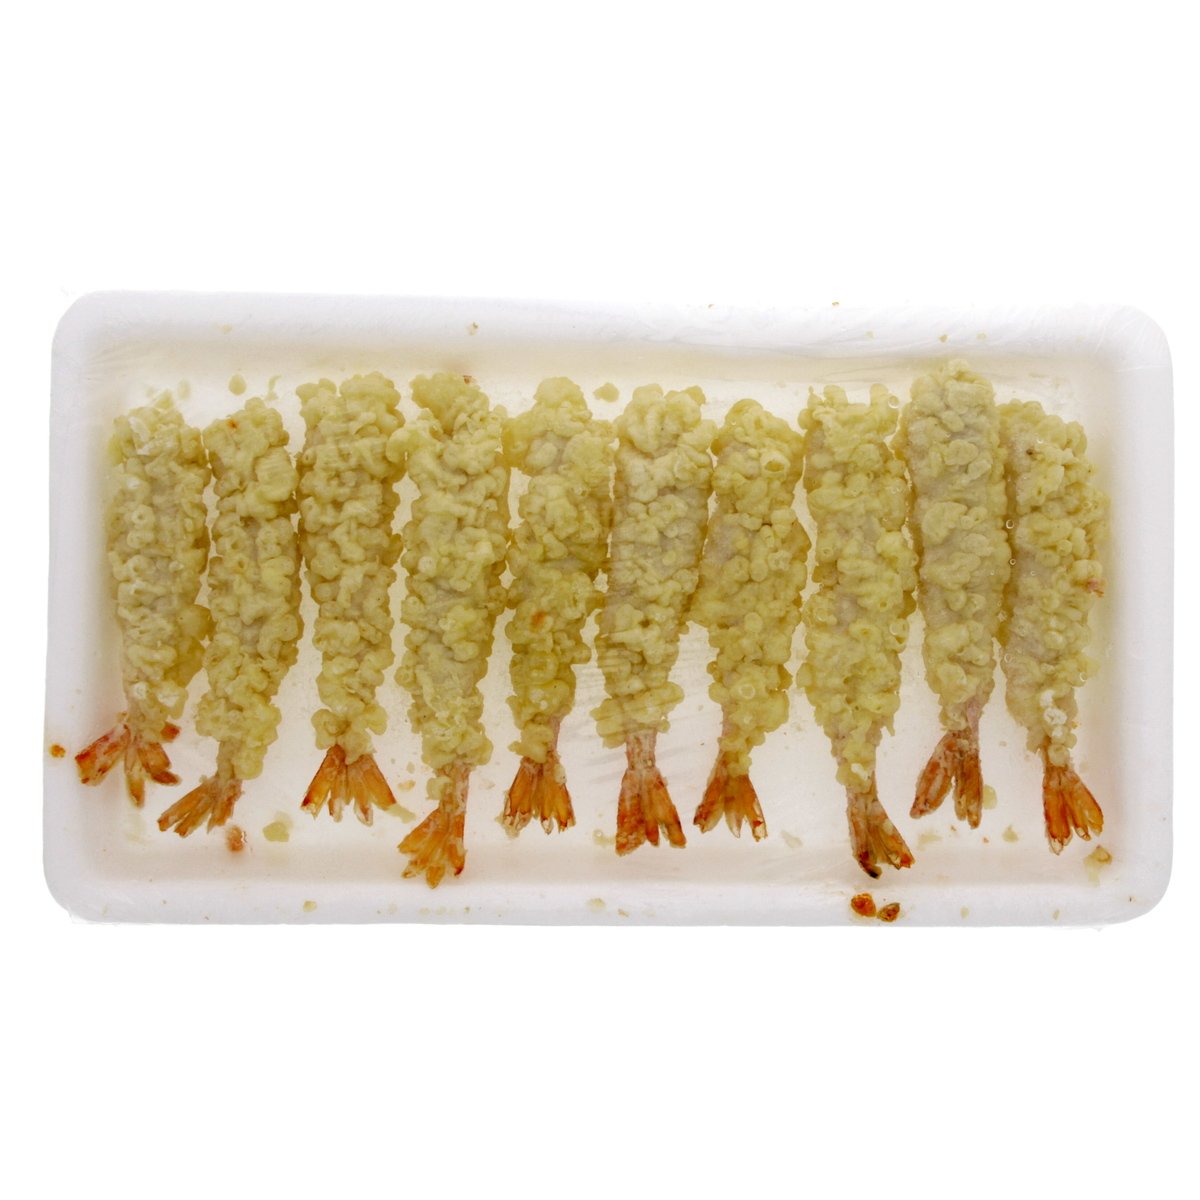 Freshly Foods Tempura Shrimps 230 g